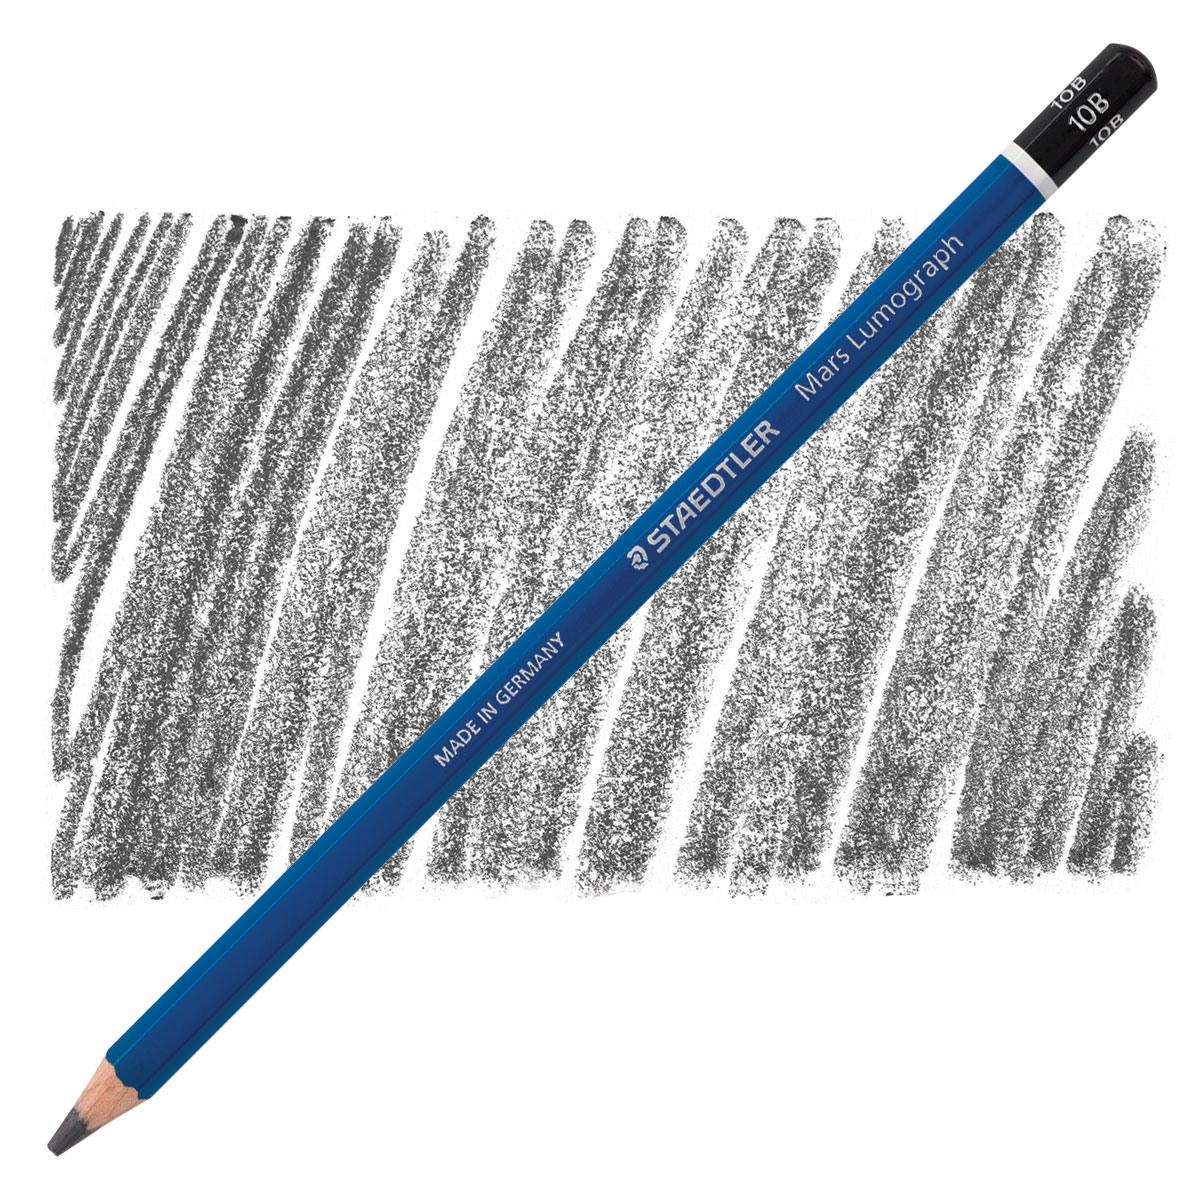 STAEDTLER Mars Lumograph, Drawing Pencil EE for